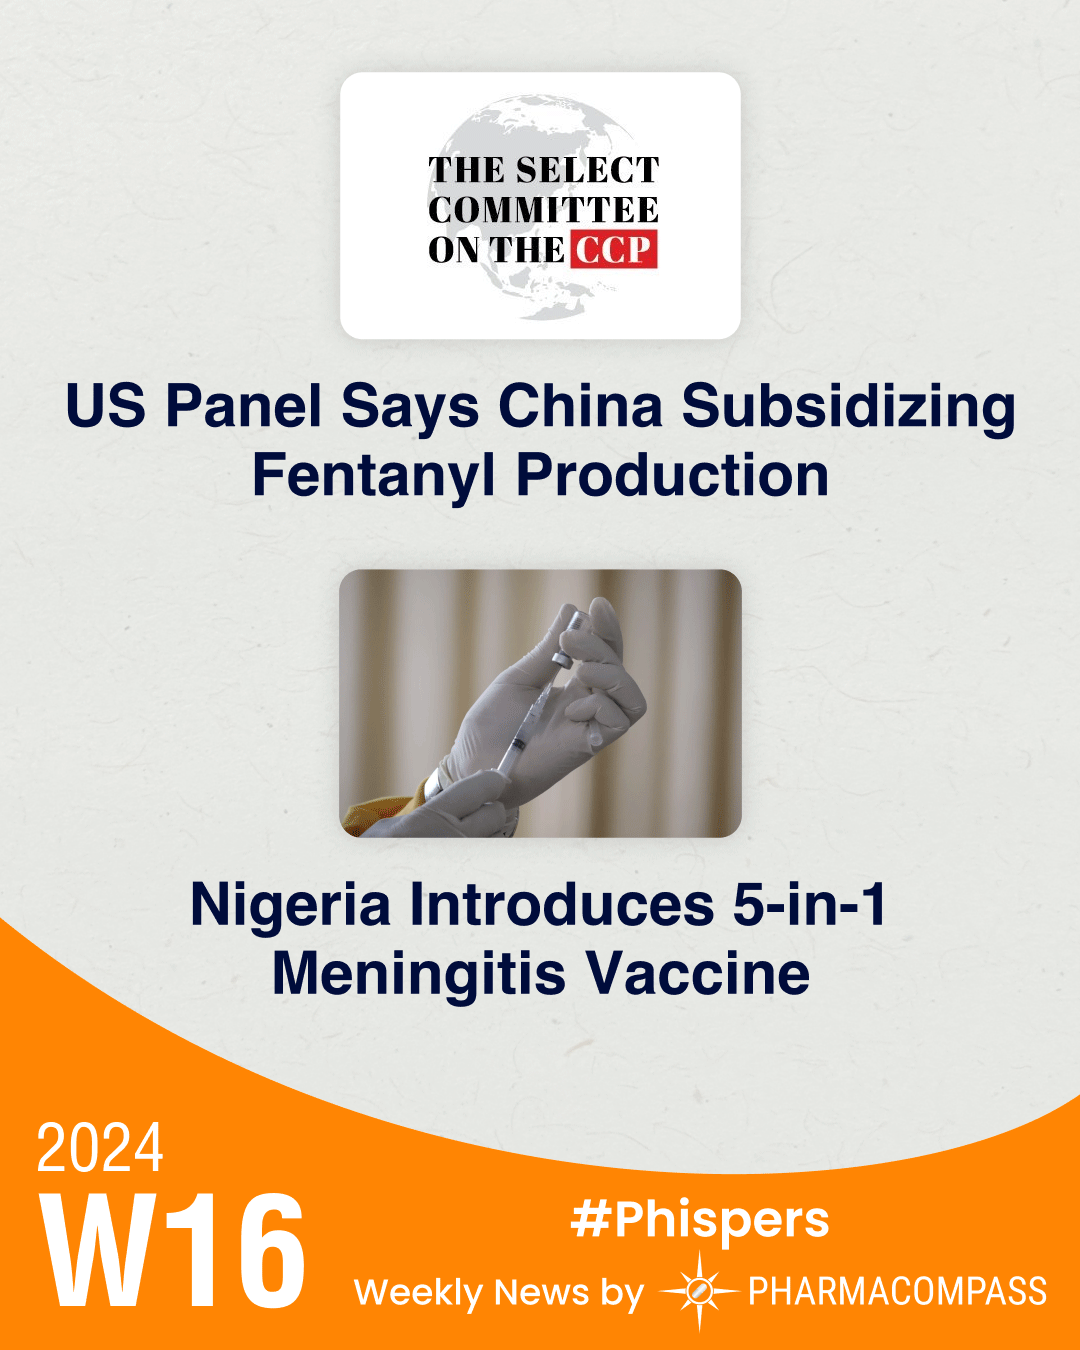 US panel accuses China of subsidizing fentanyl production; Nigeria introduces 5-in-1 meningitis vaccine